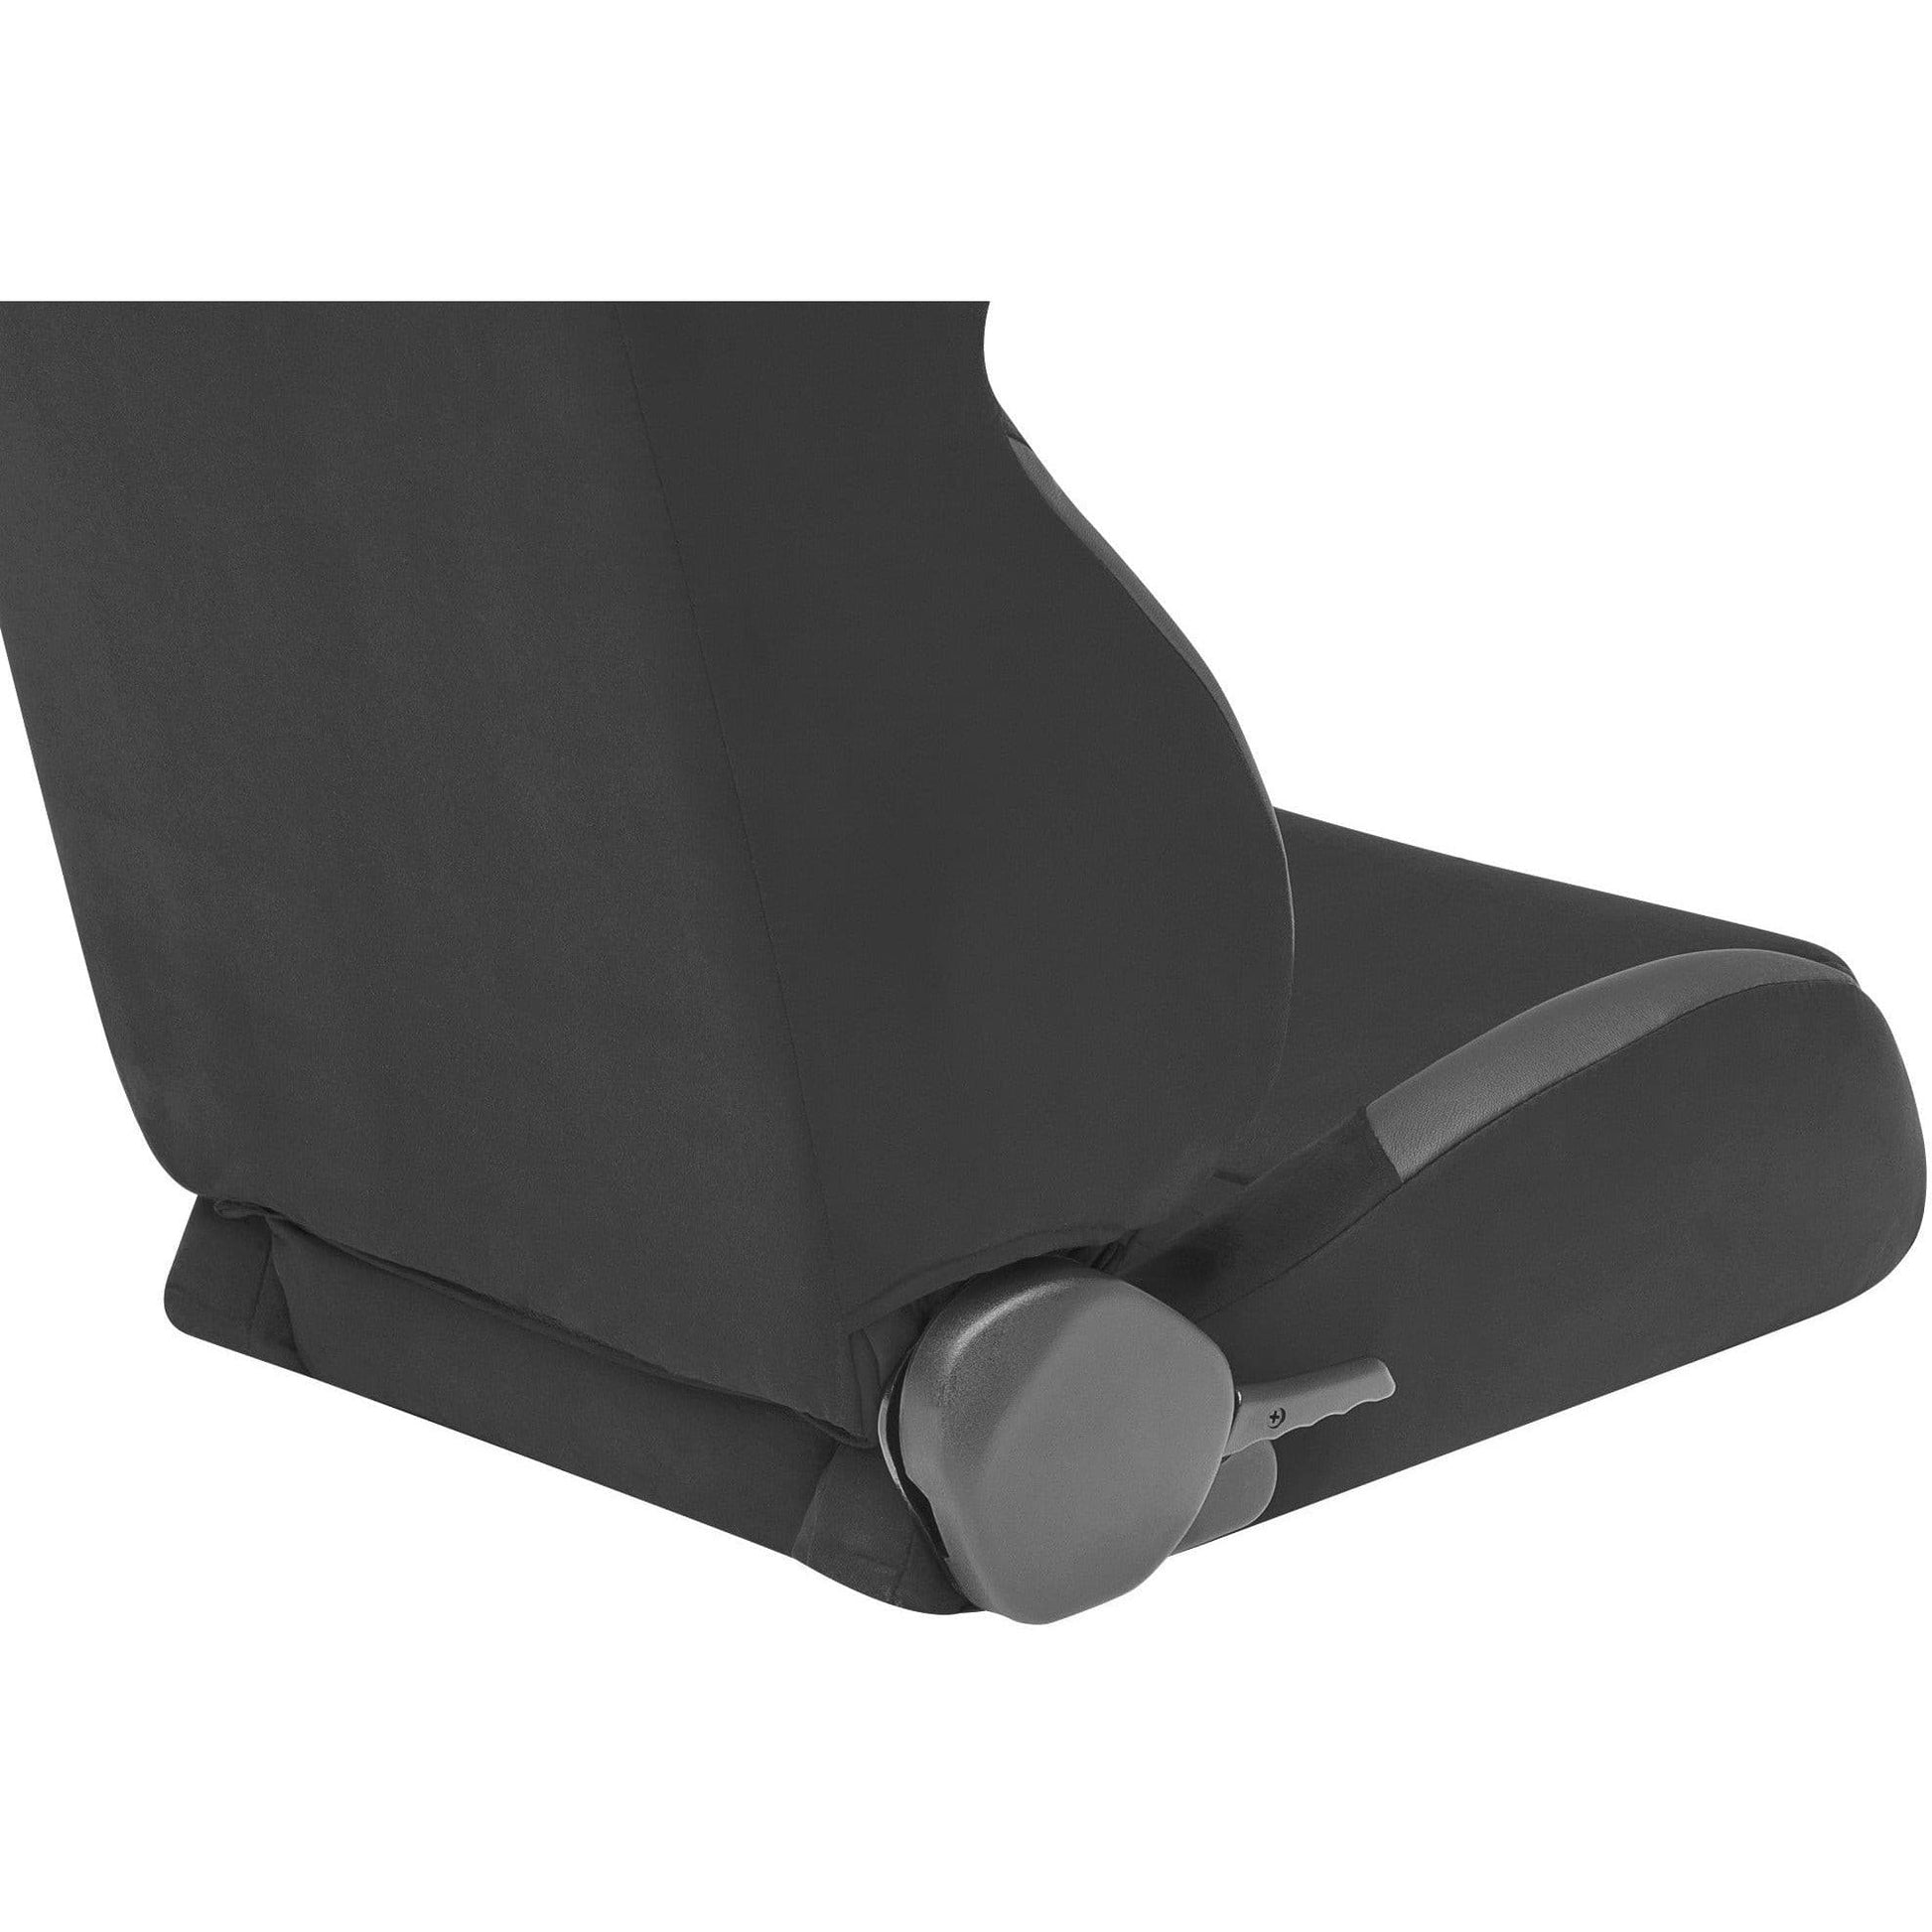 Corbeau A4 Black Cloth Seats - UNIVERSAL (Pair)